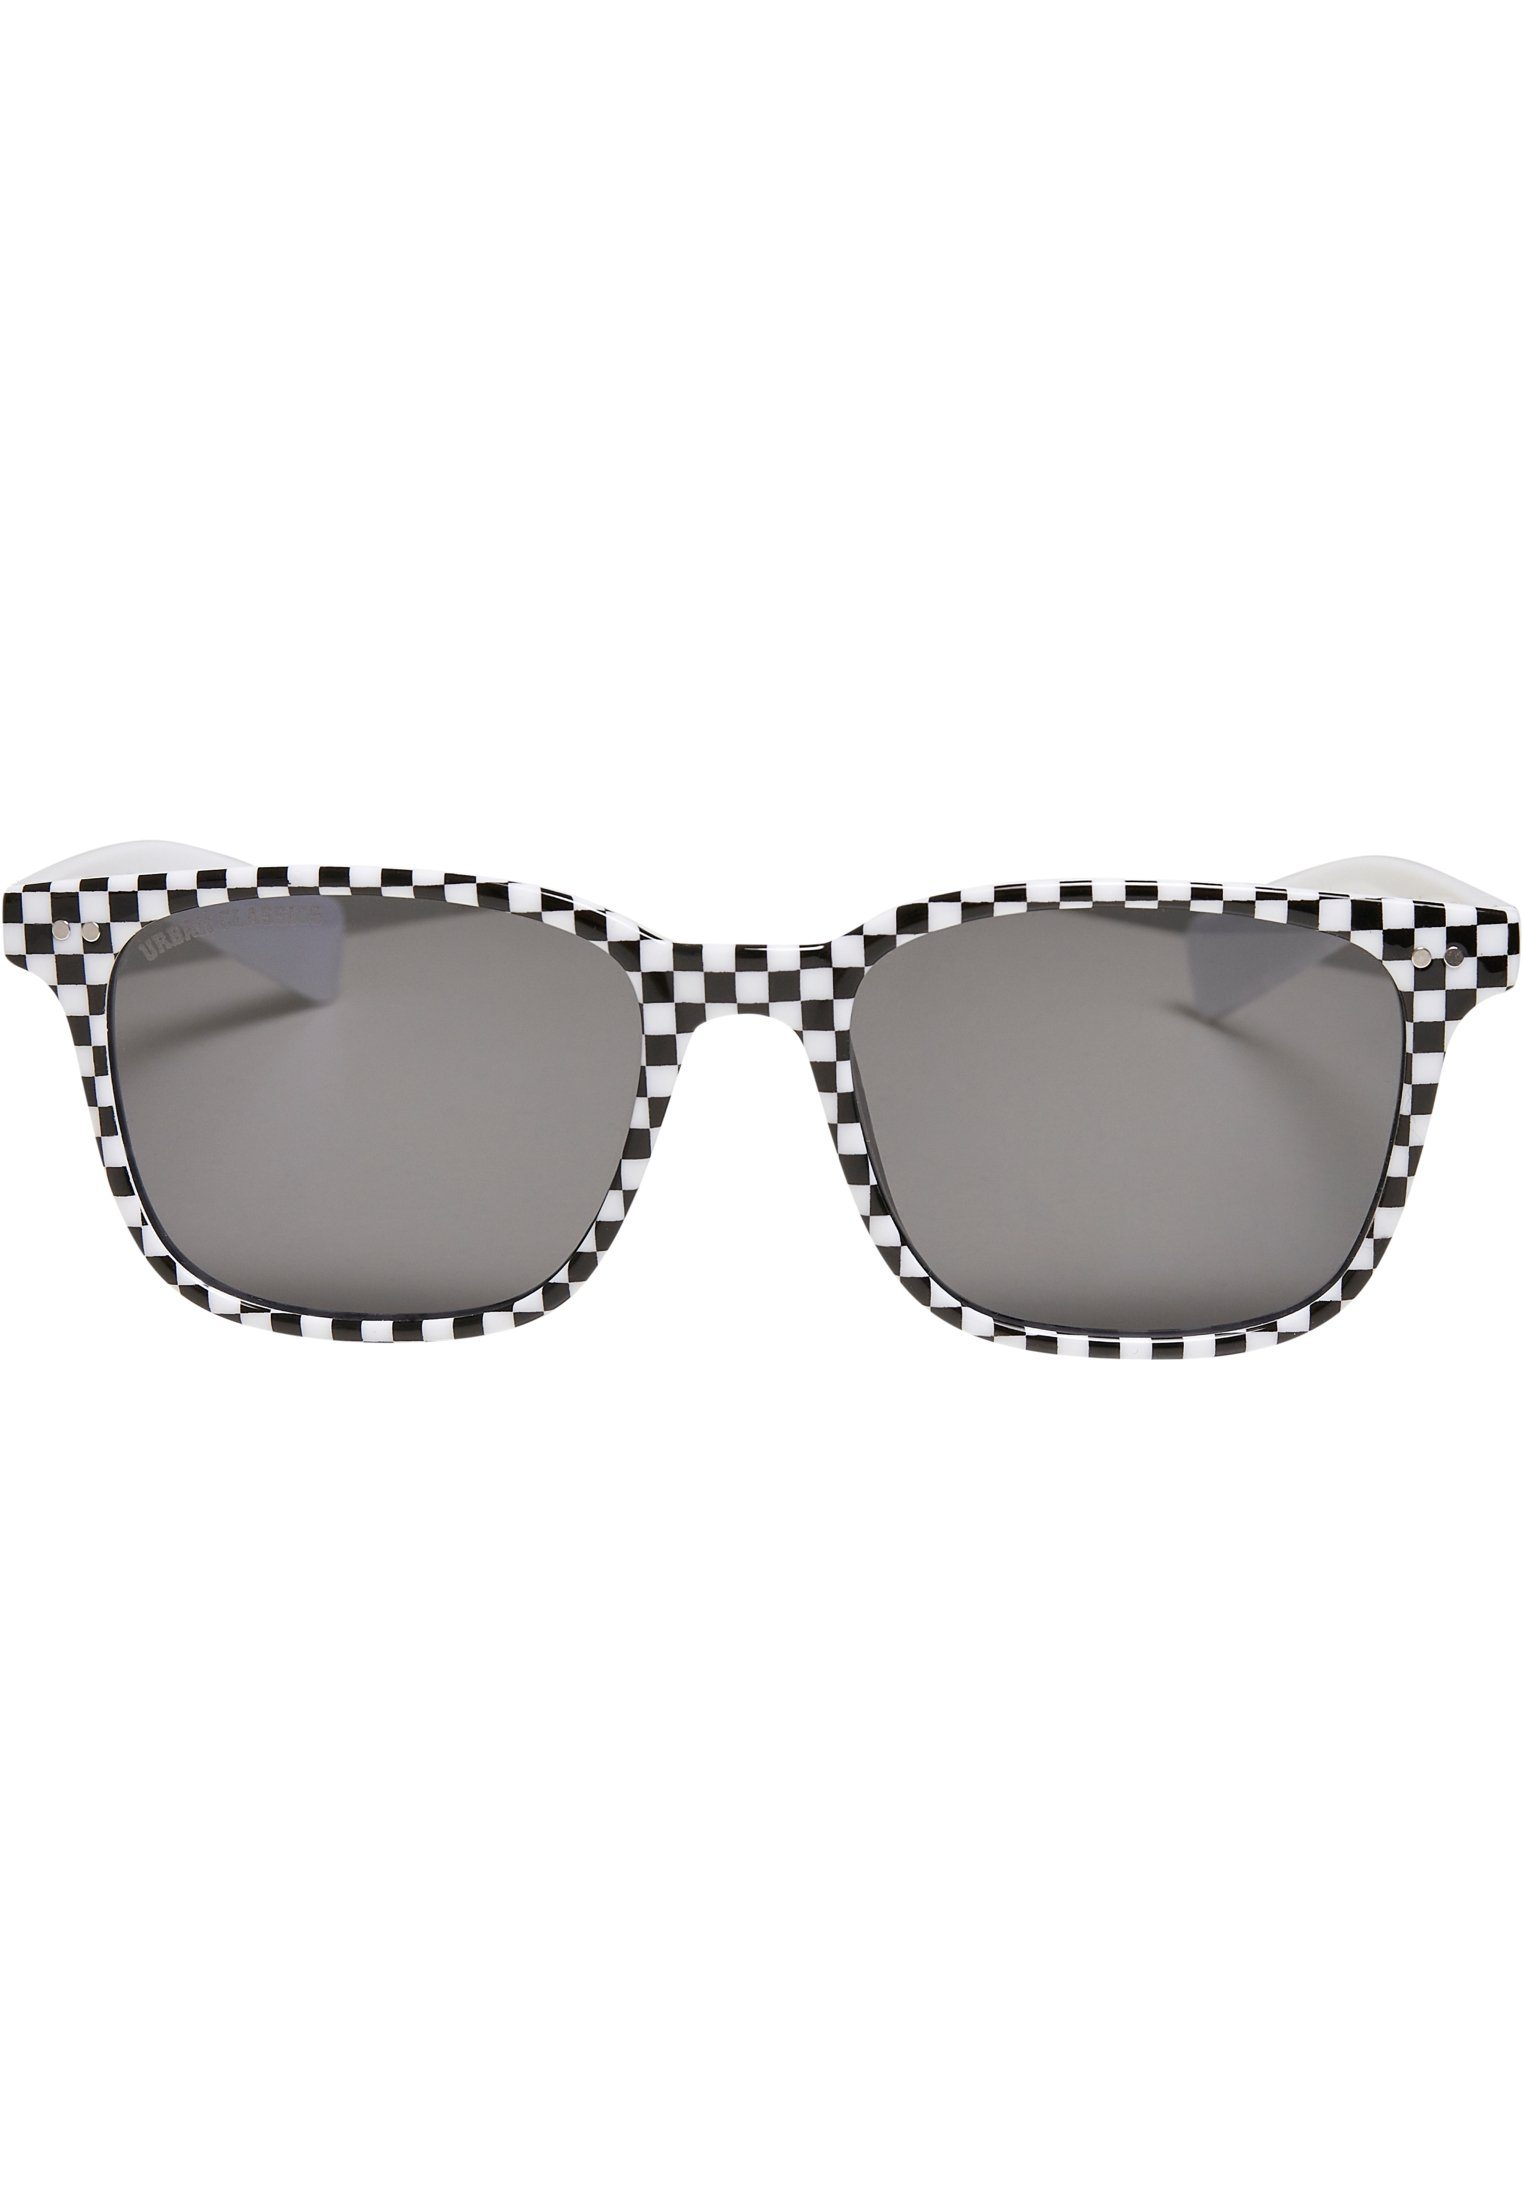 Sunglasses Sonnenbrille Unisex Faial CLASSICS URBAN